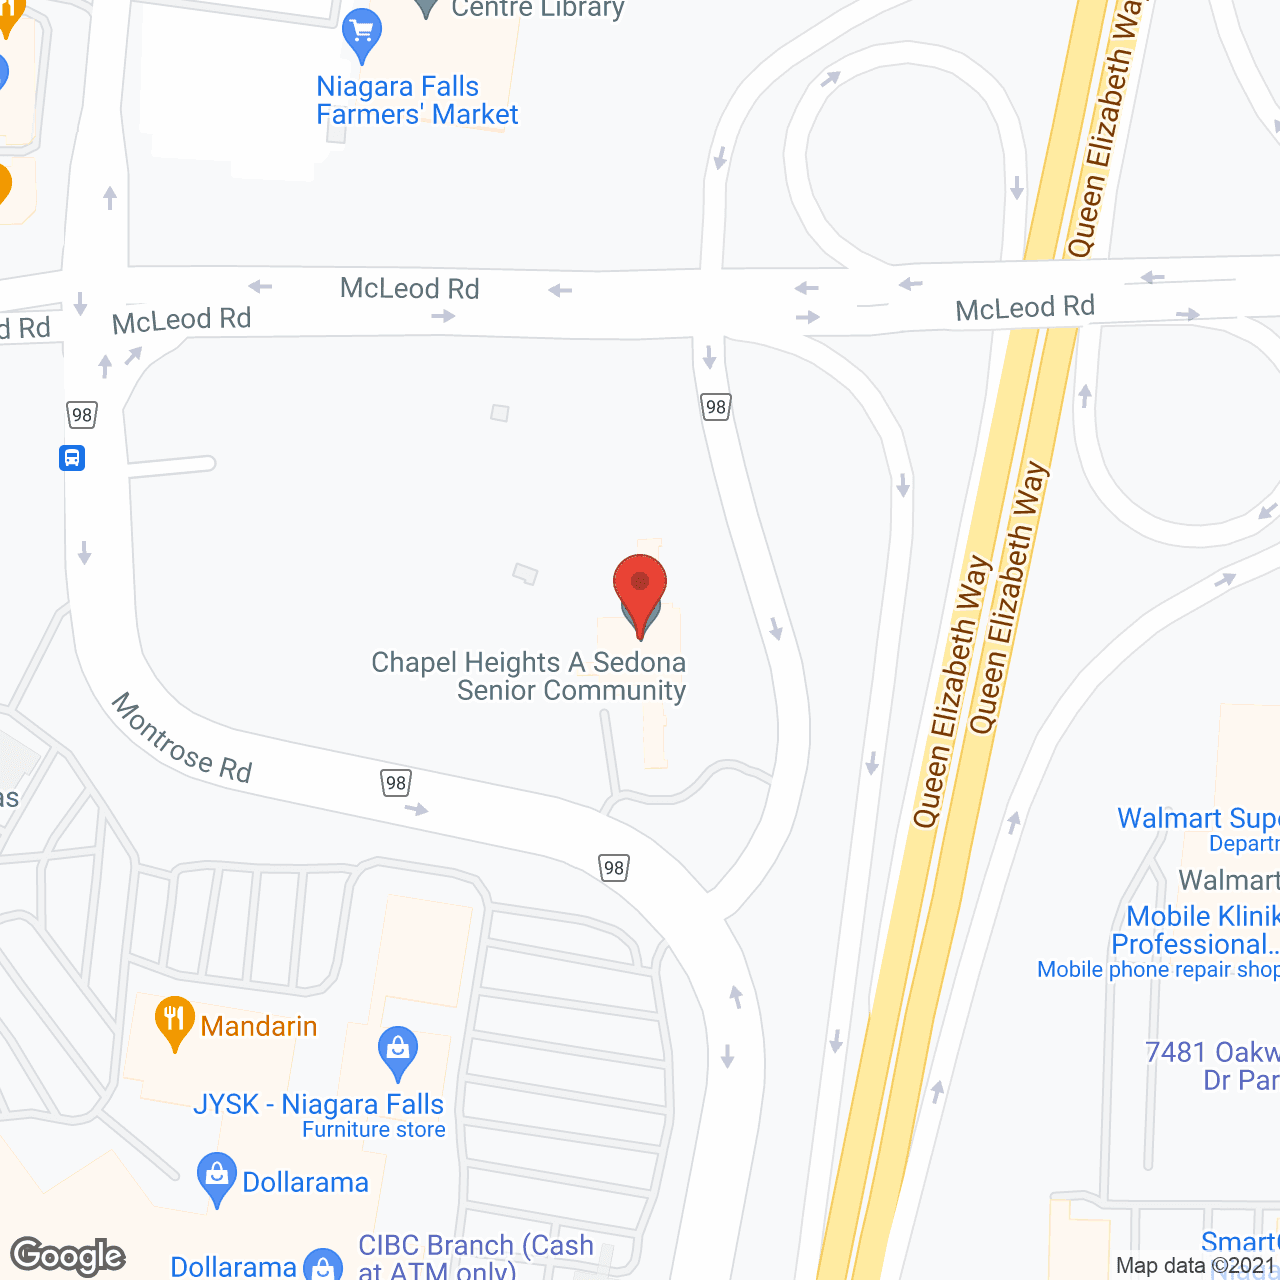 Chapel Heights / A Sedona Senior Community in google map